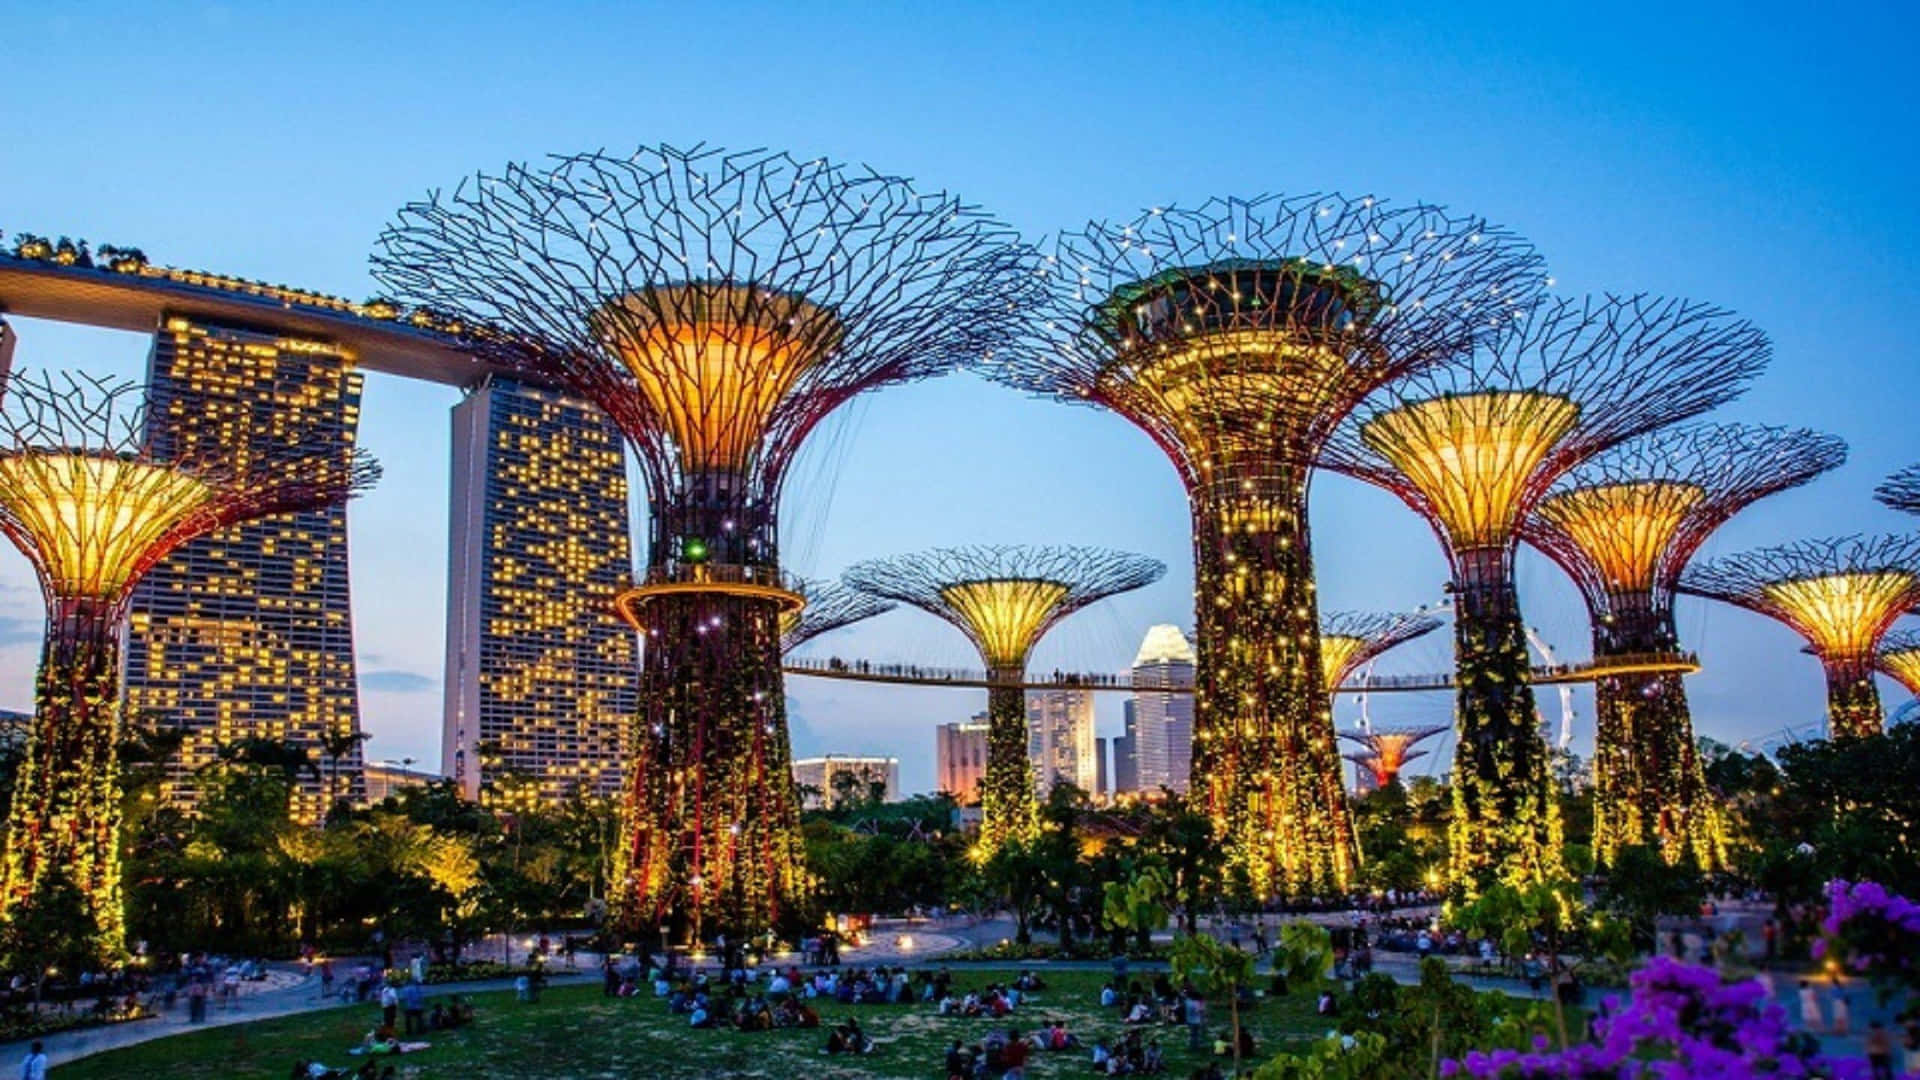 Take in the beautiful skyline of Singapore